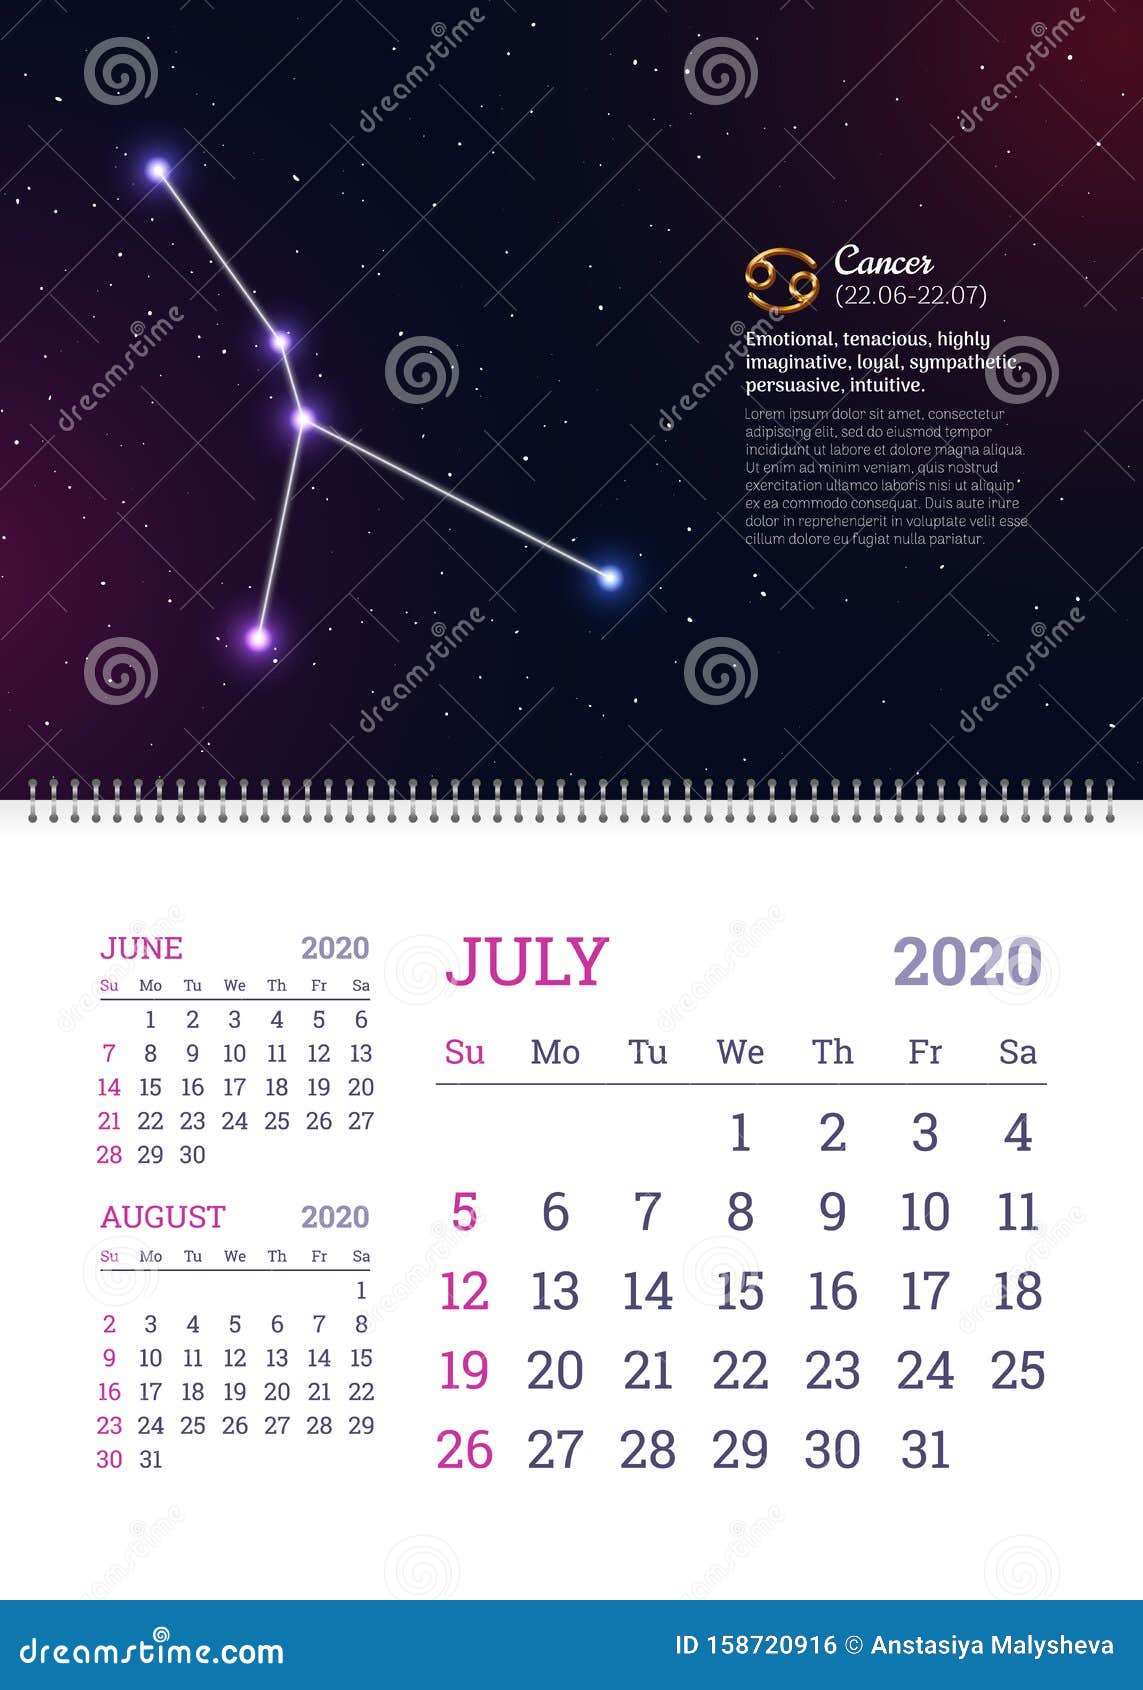 july astrology sign